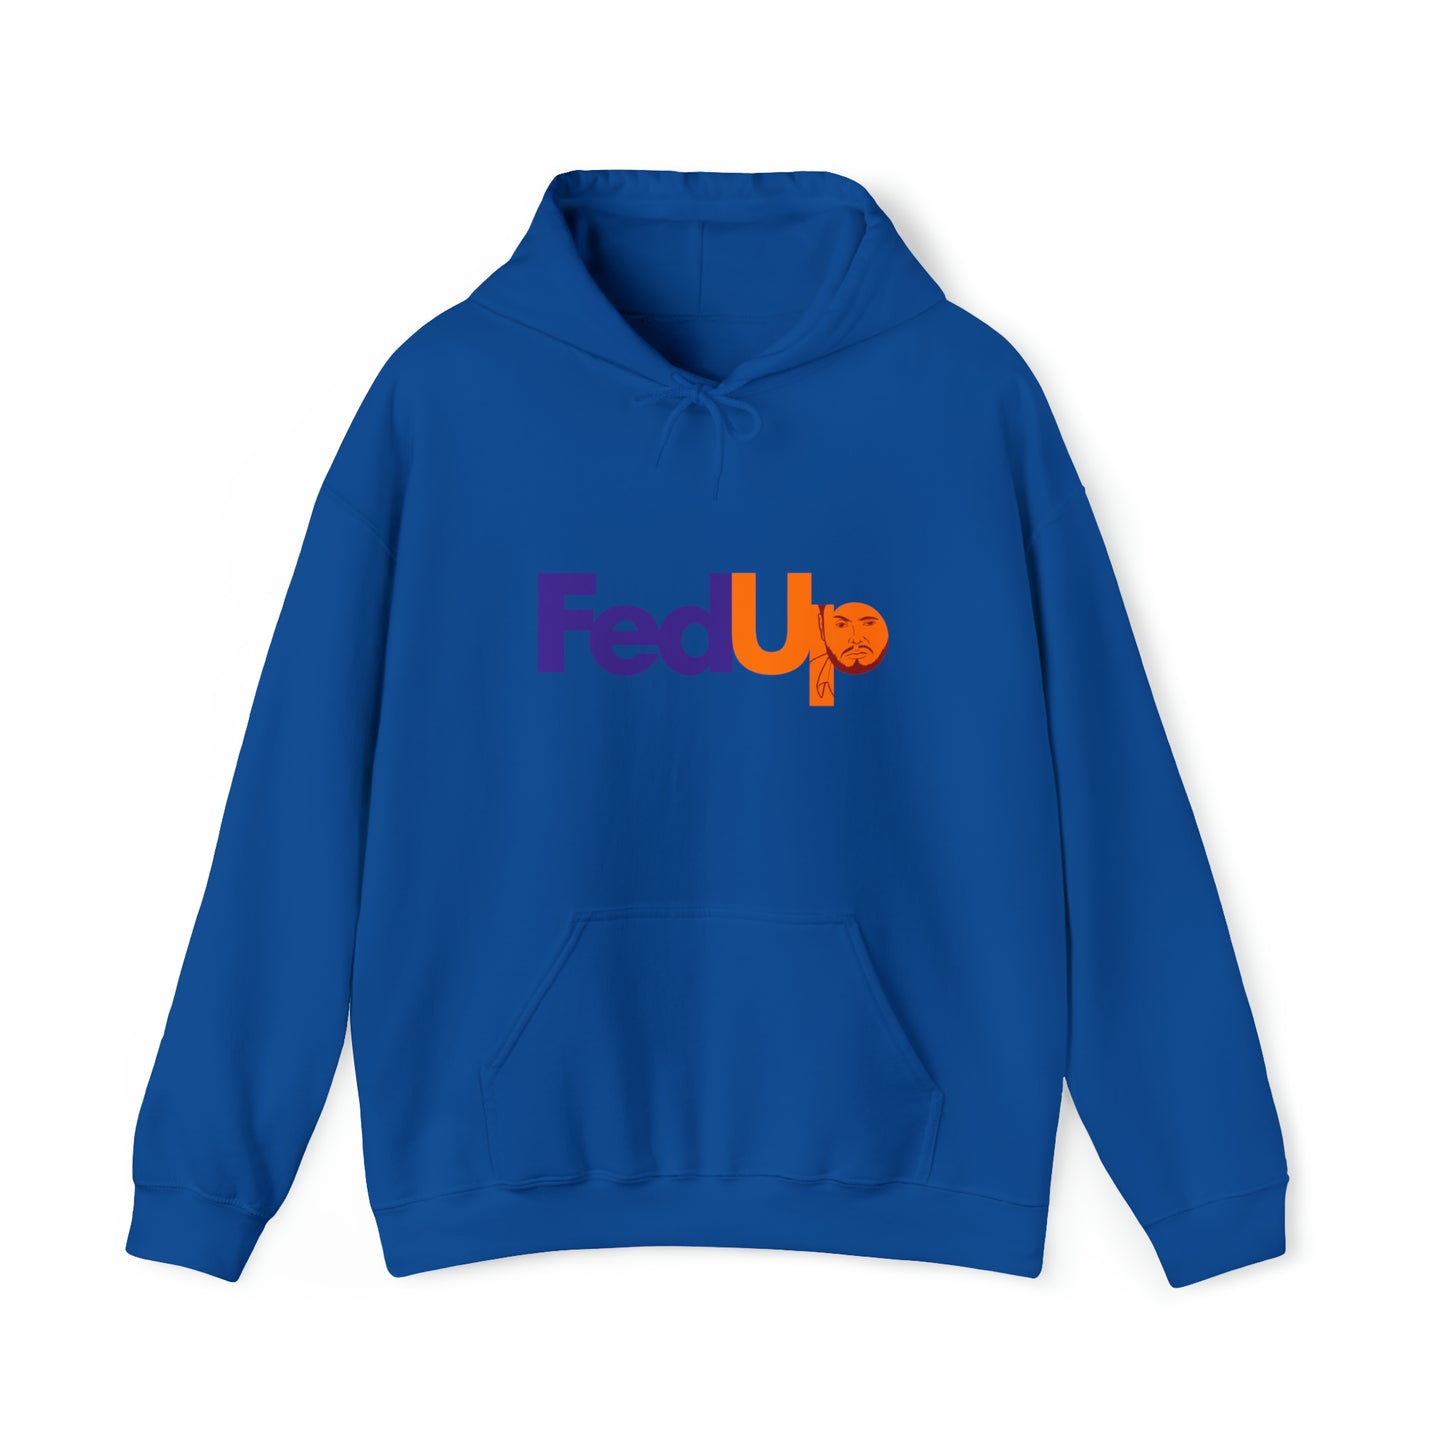 Custom Parody Hooded Sweatshirt, Fed-up design